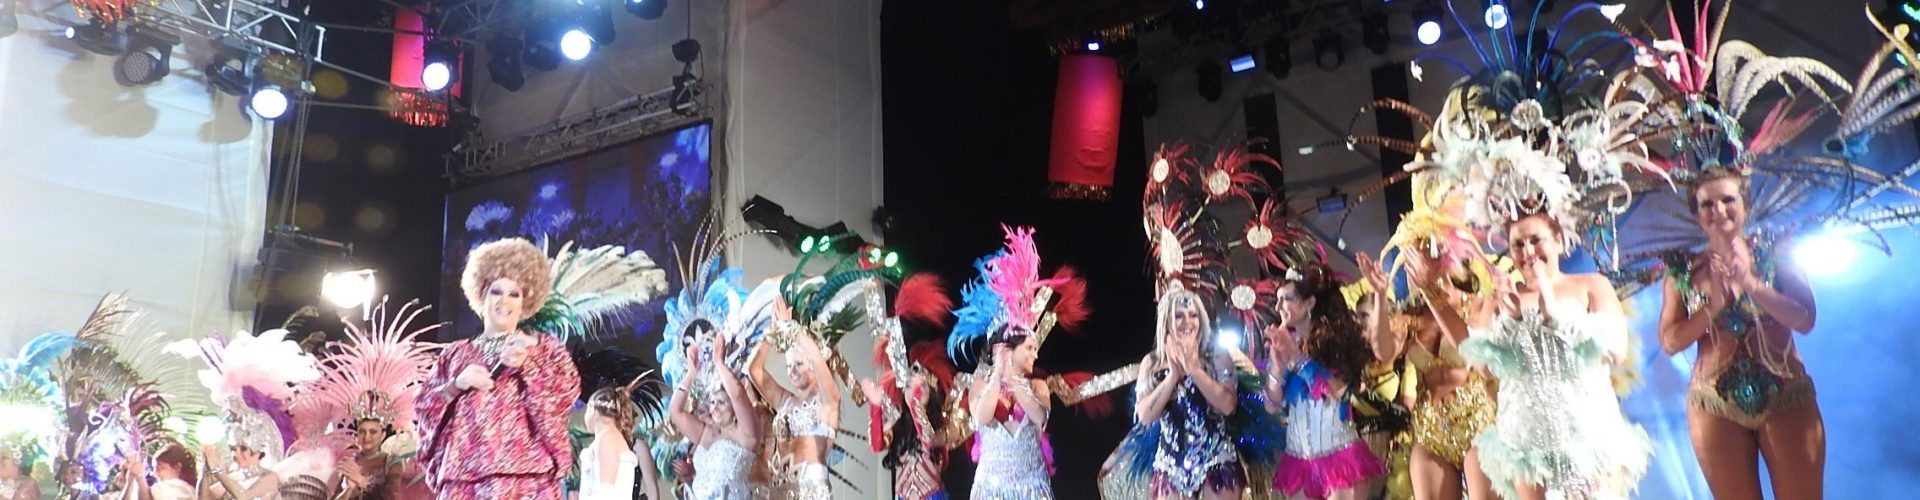 Las treinta reinas de comparsas sacan lustre al Carnaval de Vinaròs